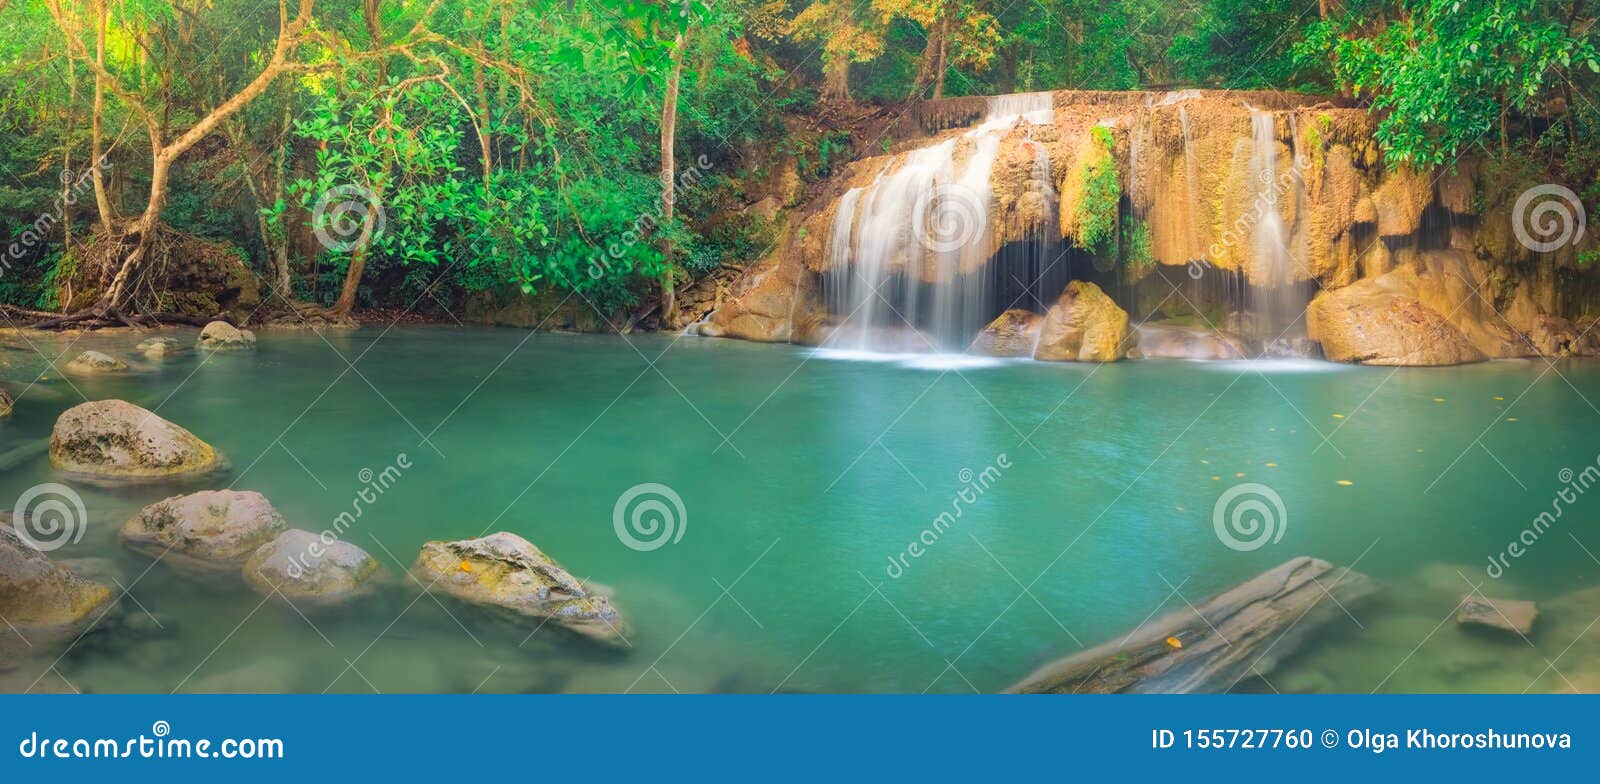 beautiful waterfall at erawan national park, thailand